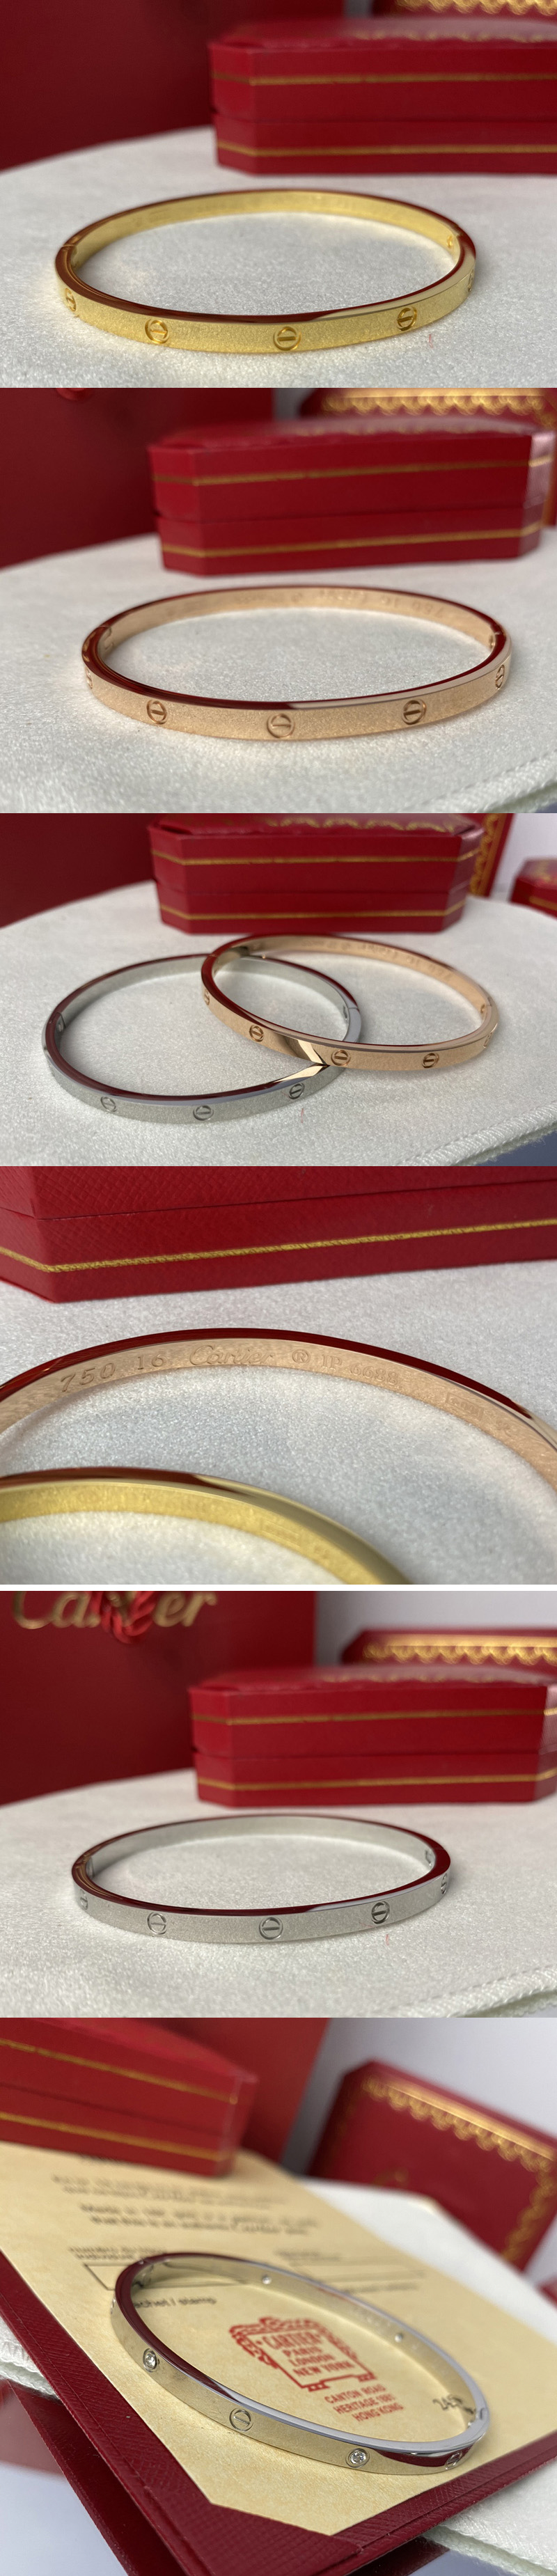 Replica Cartier Love Bracelet